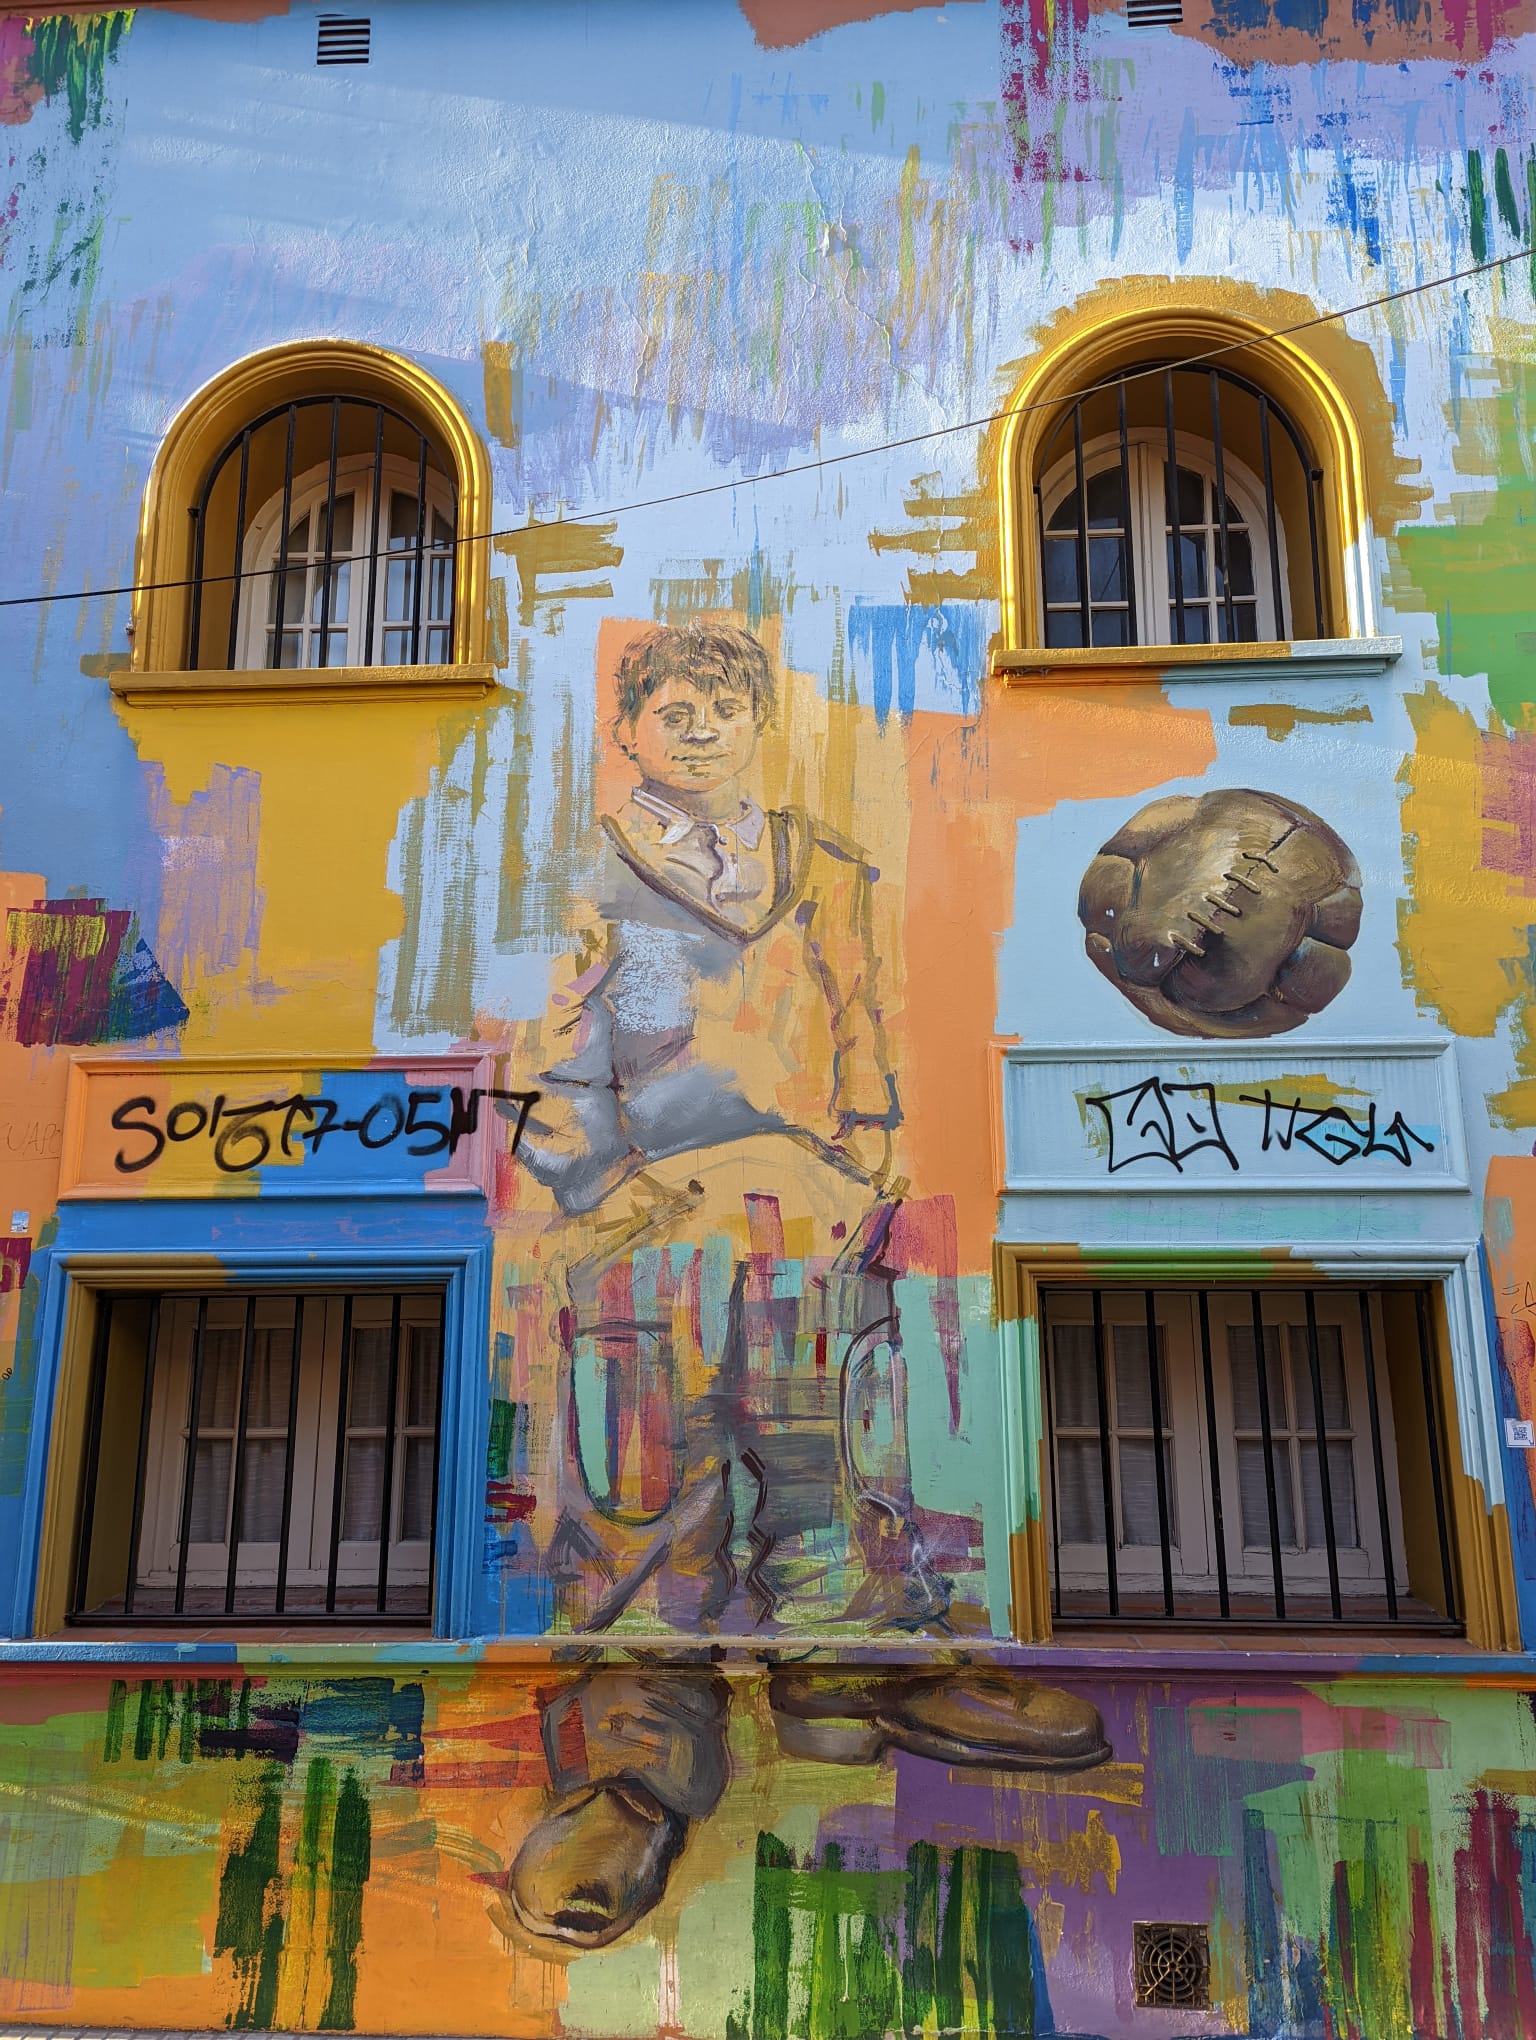 Graffiti  in the neighborhood of Palermo